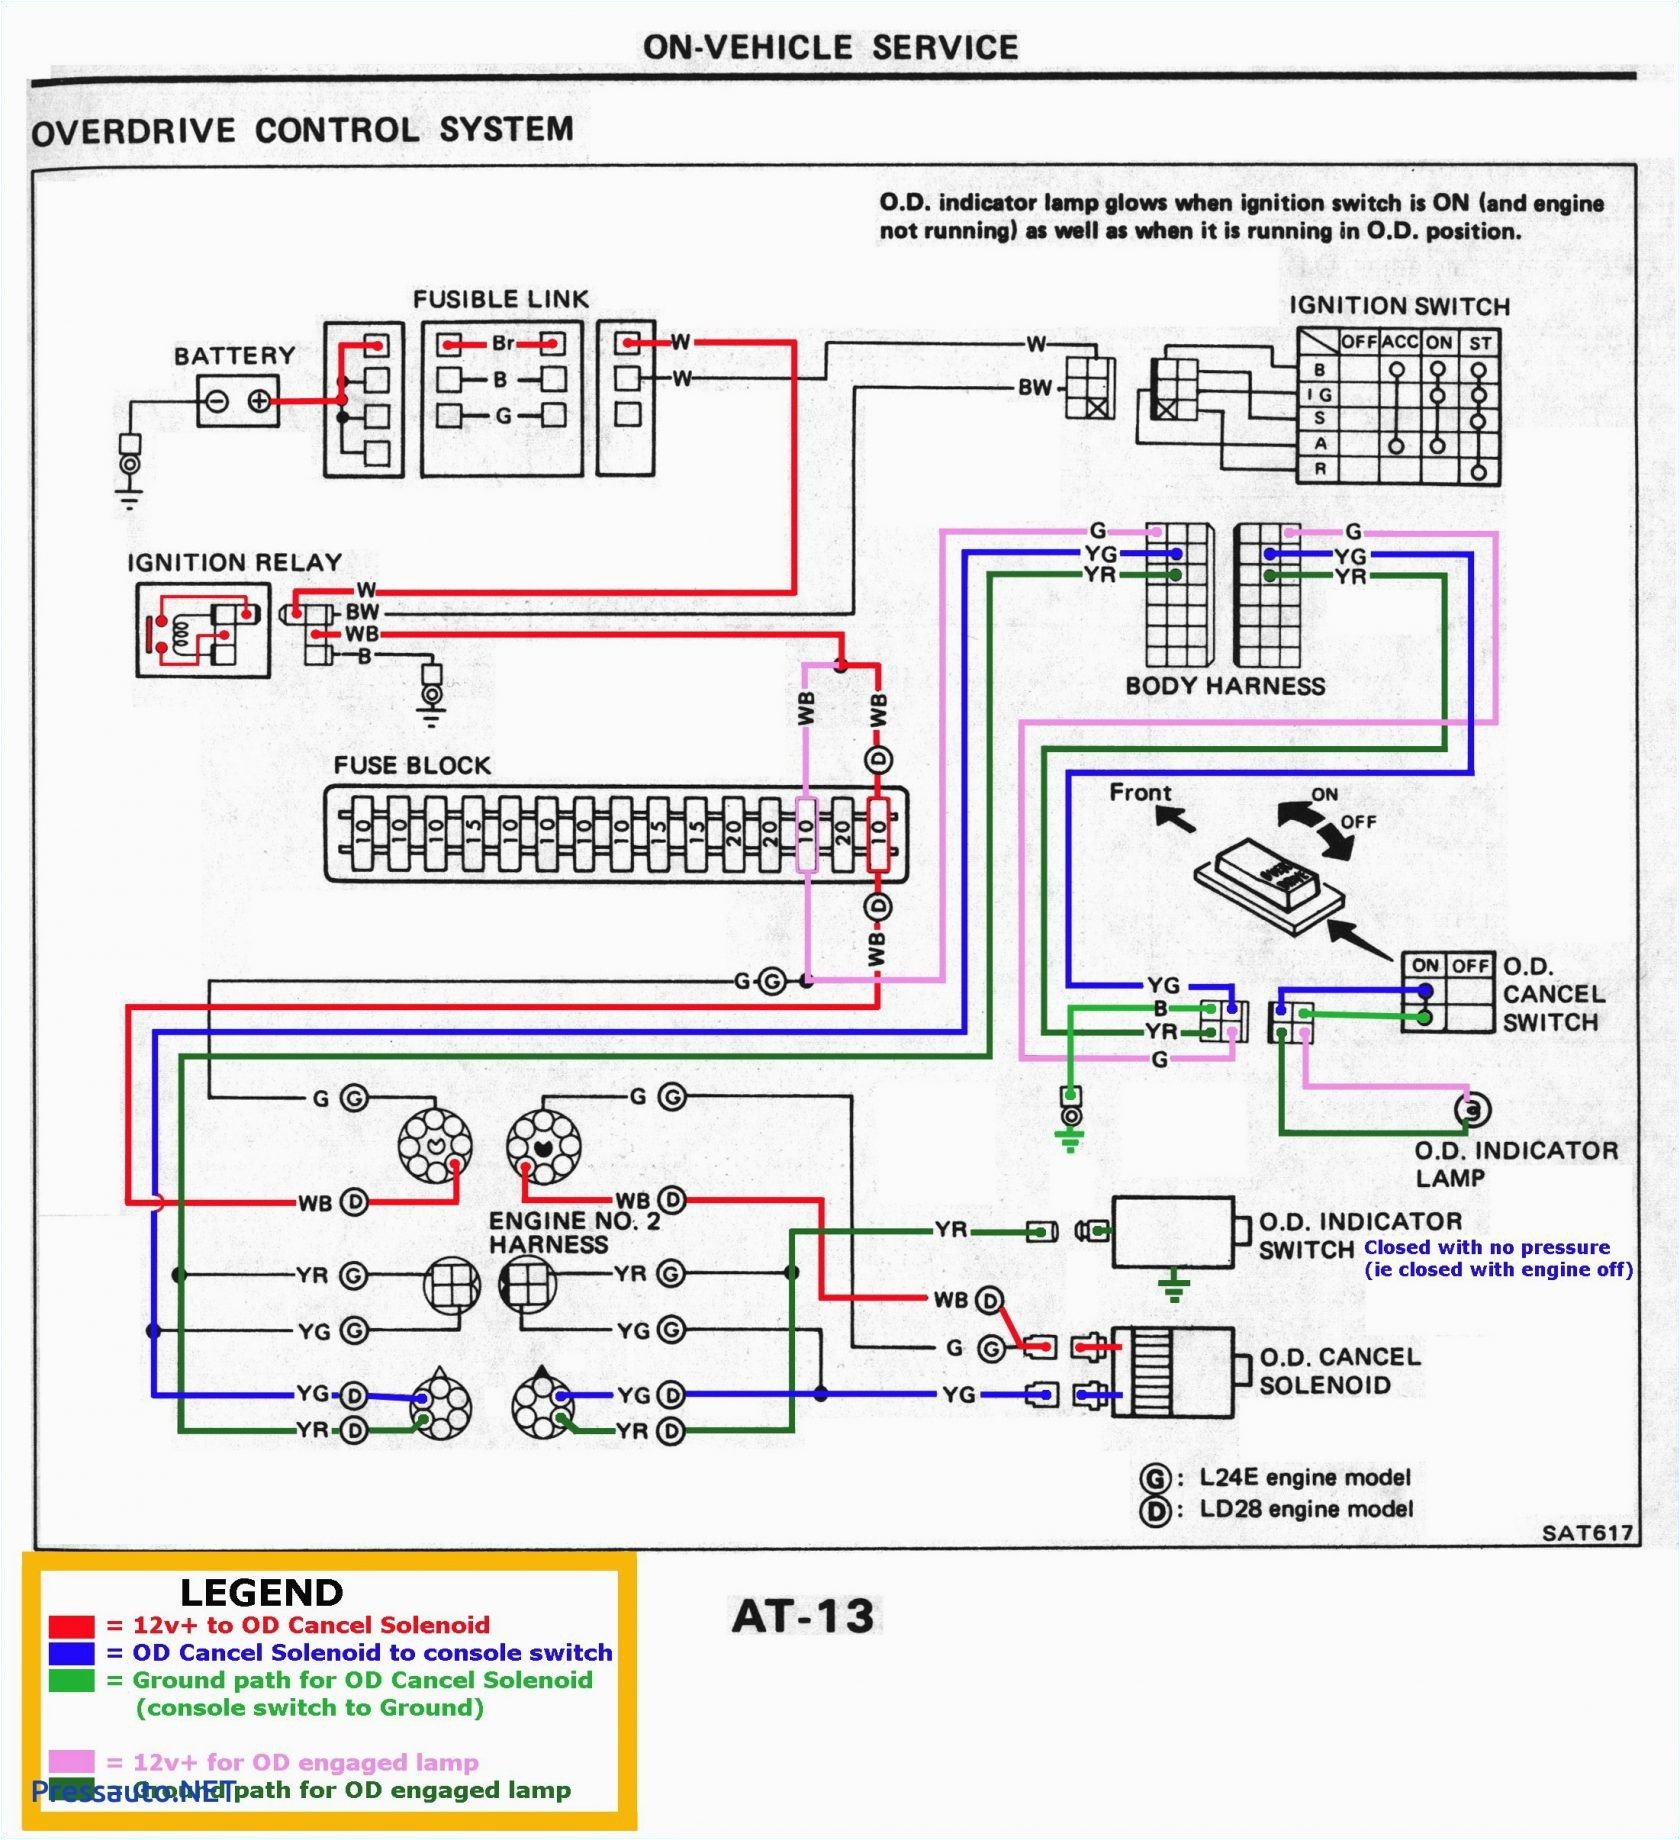 1994 saturn wiring diagram wiring diagrams konsult 1994 saturn wiring diagram